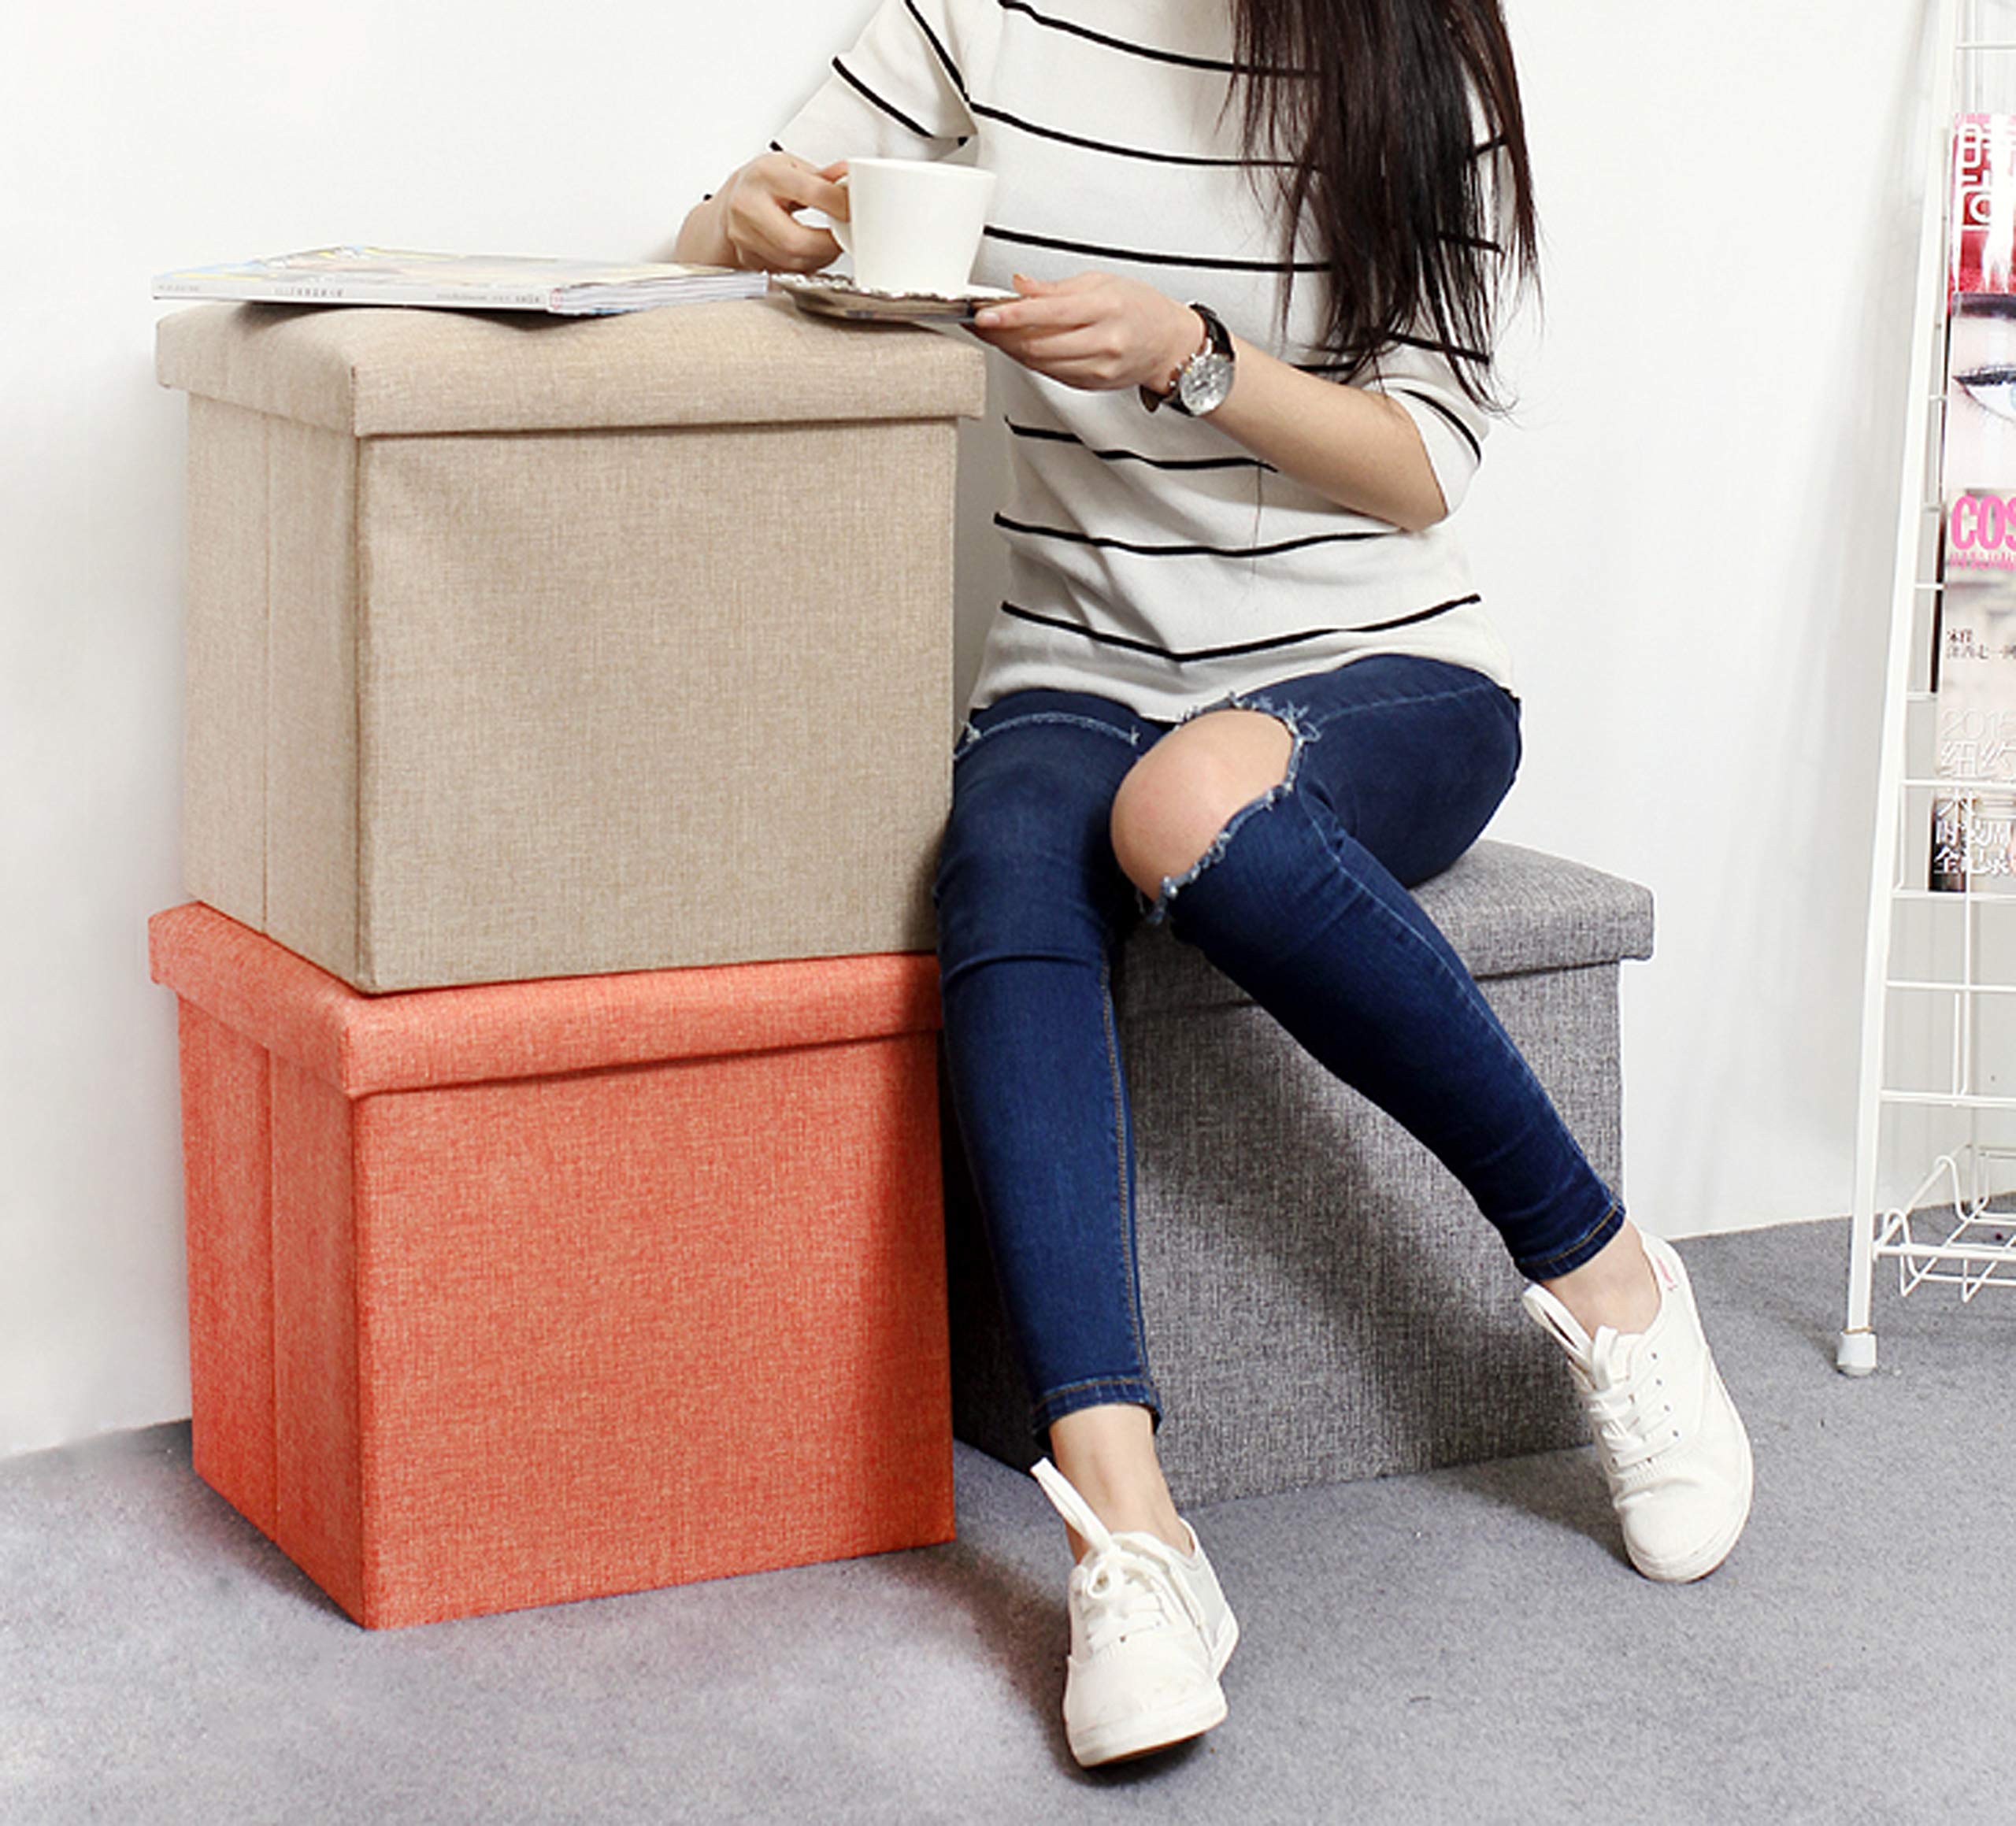 NISUNS OT01 Linen Folding Storage Ottoman Cube Footrest Seat, 12 X 12 X 12 Inches (Linen Gray)